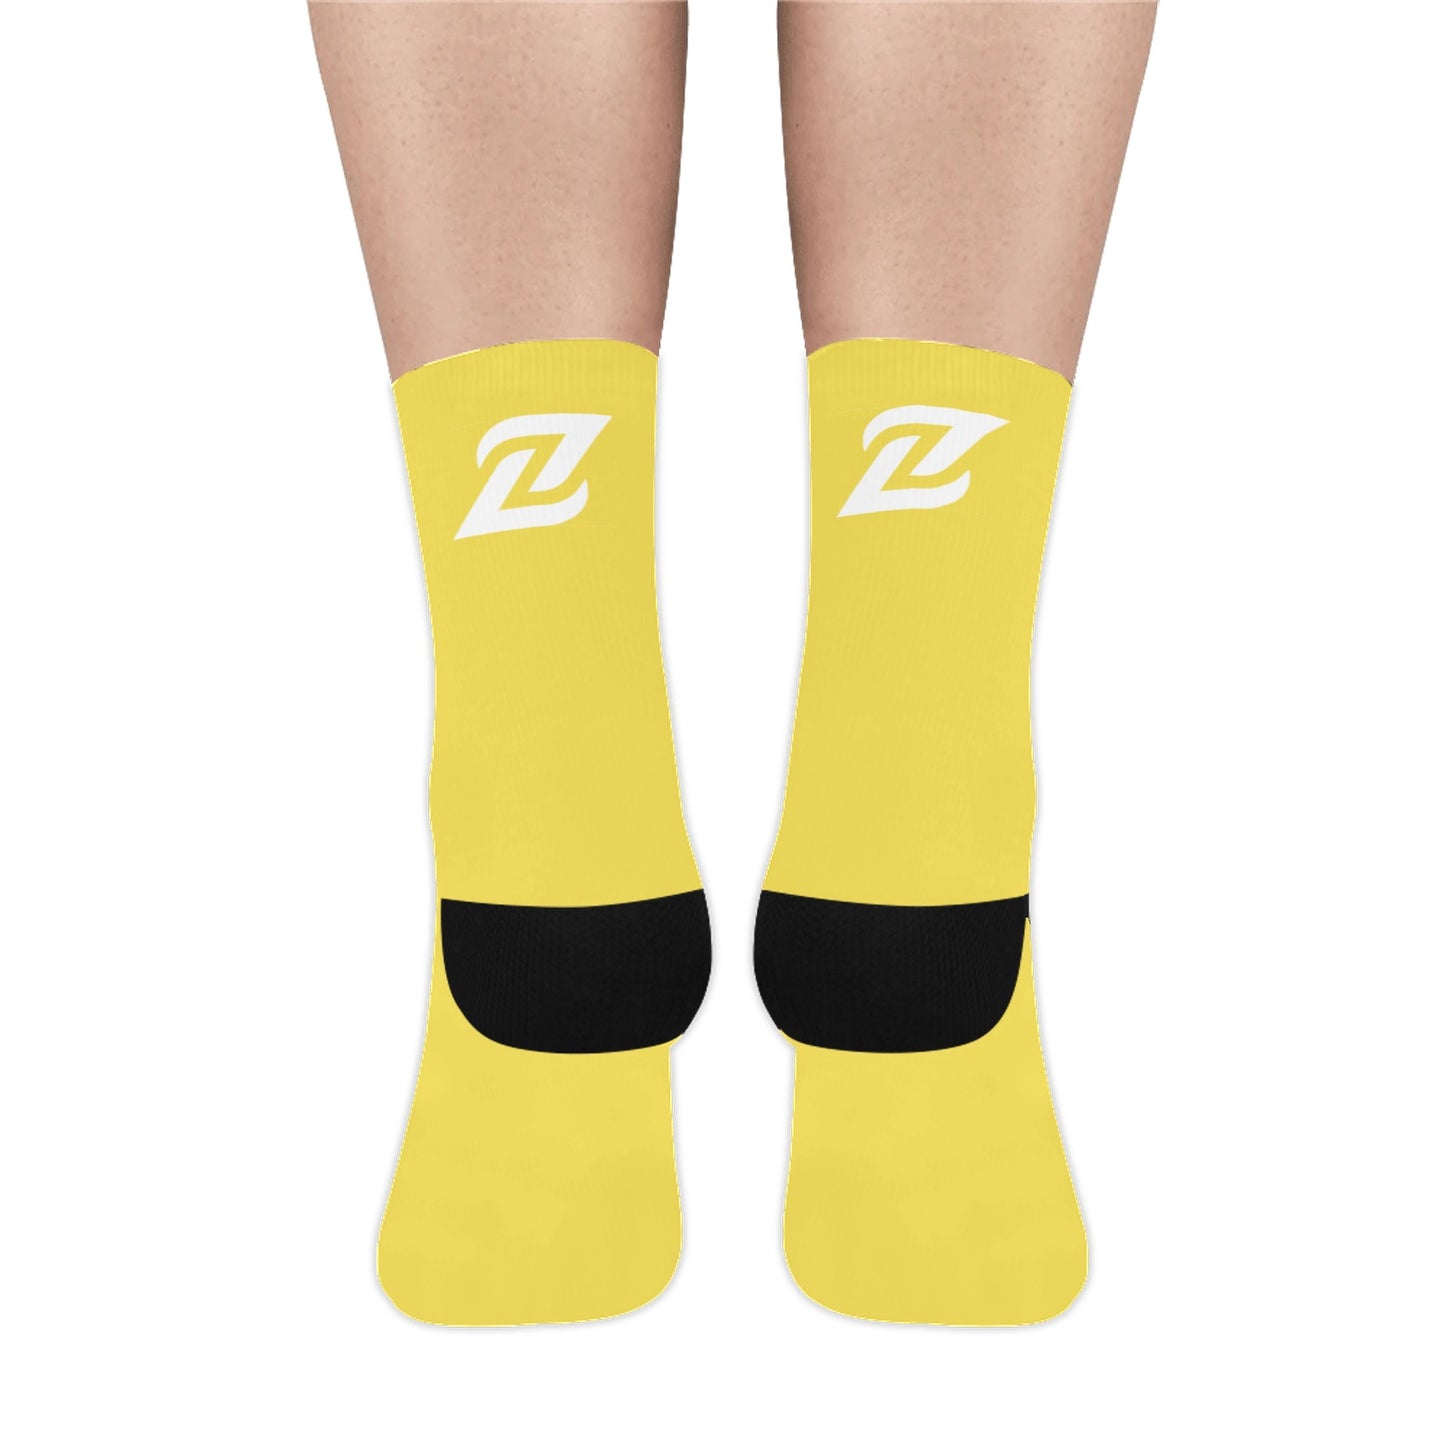 Zen Socks - Yellow